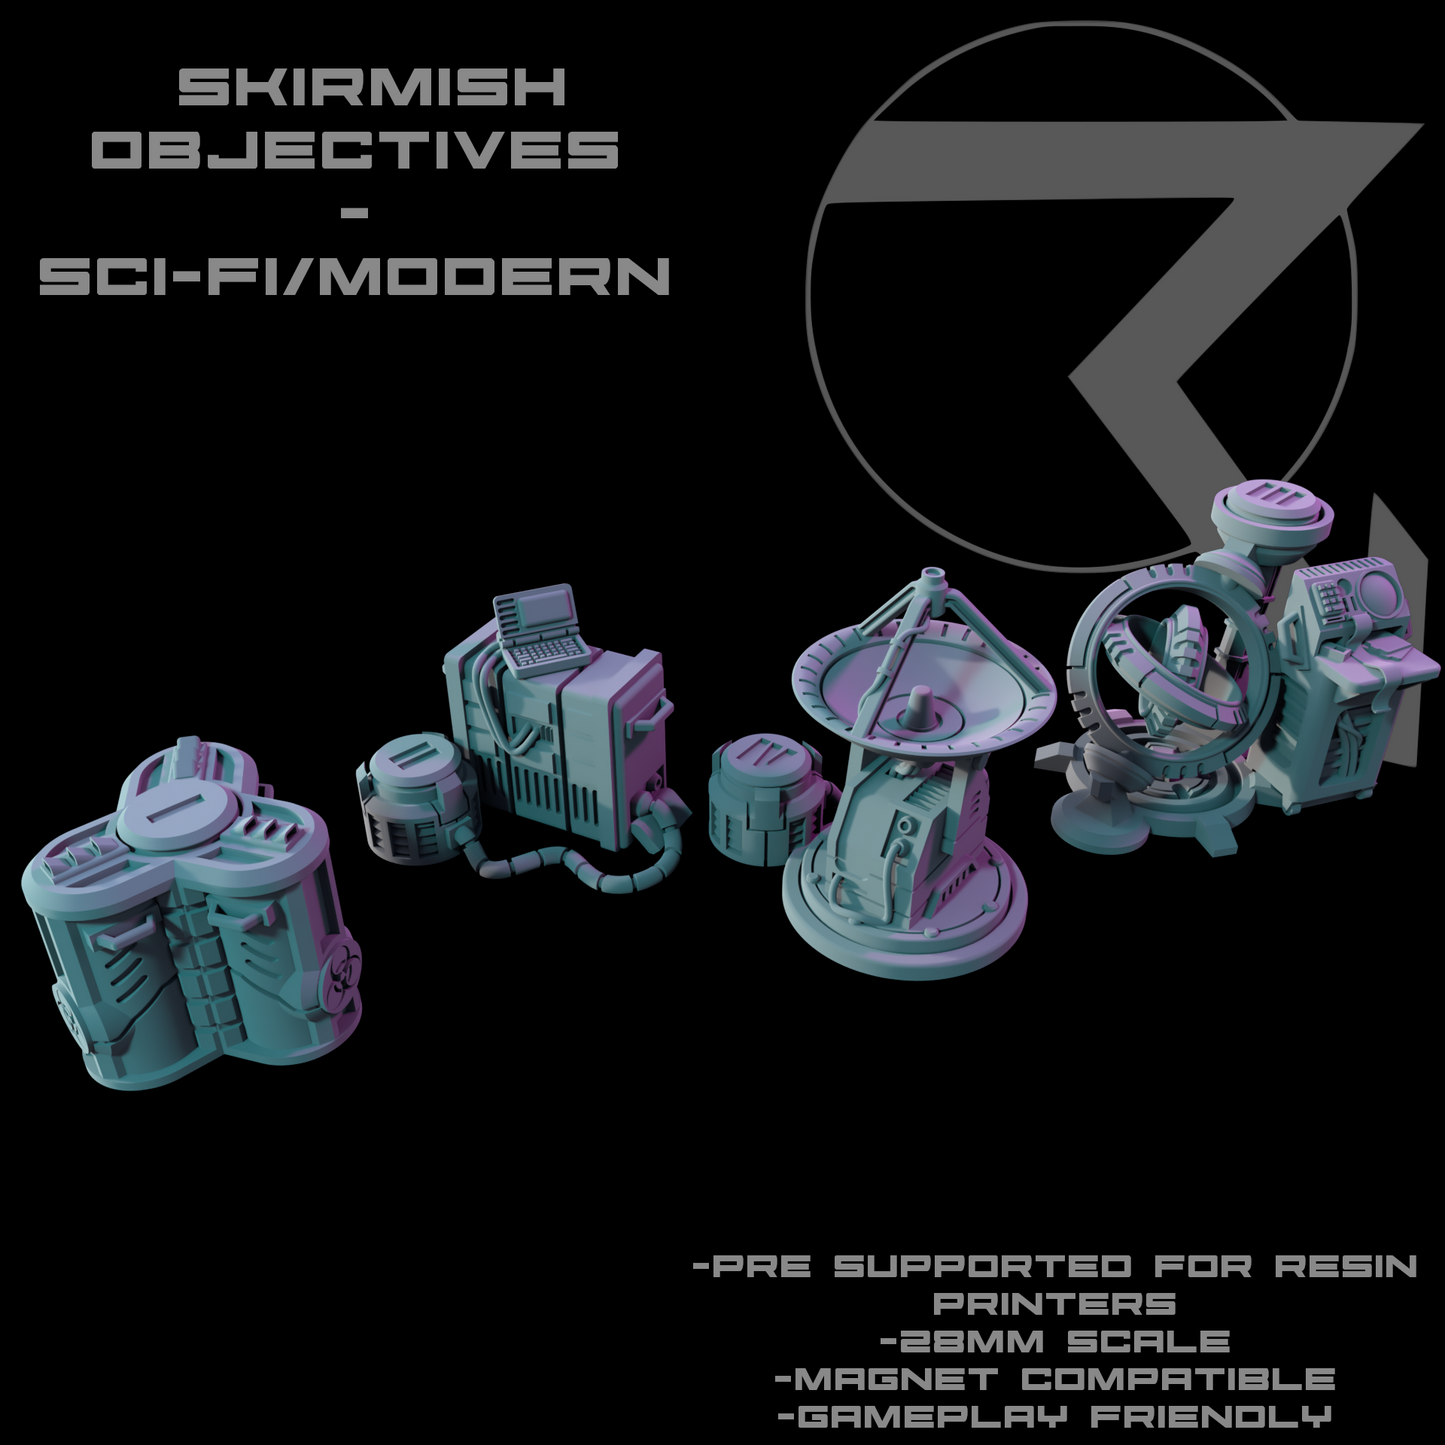 Skirmish Objectives - Sci-Fi/Modern